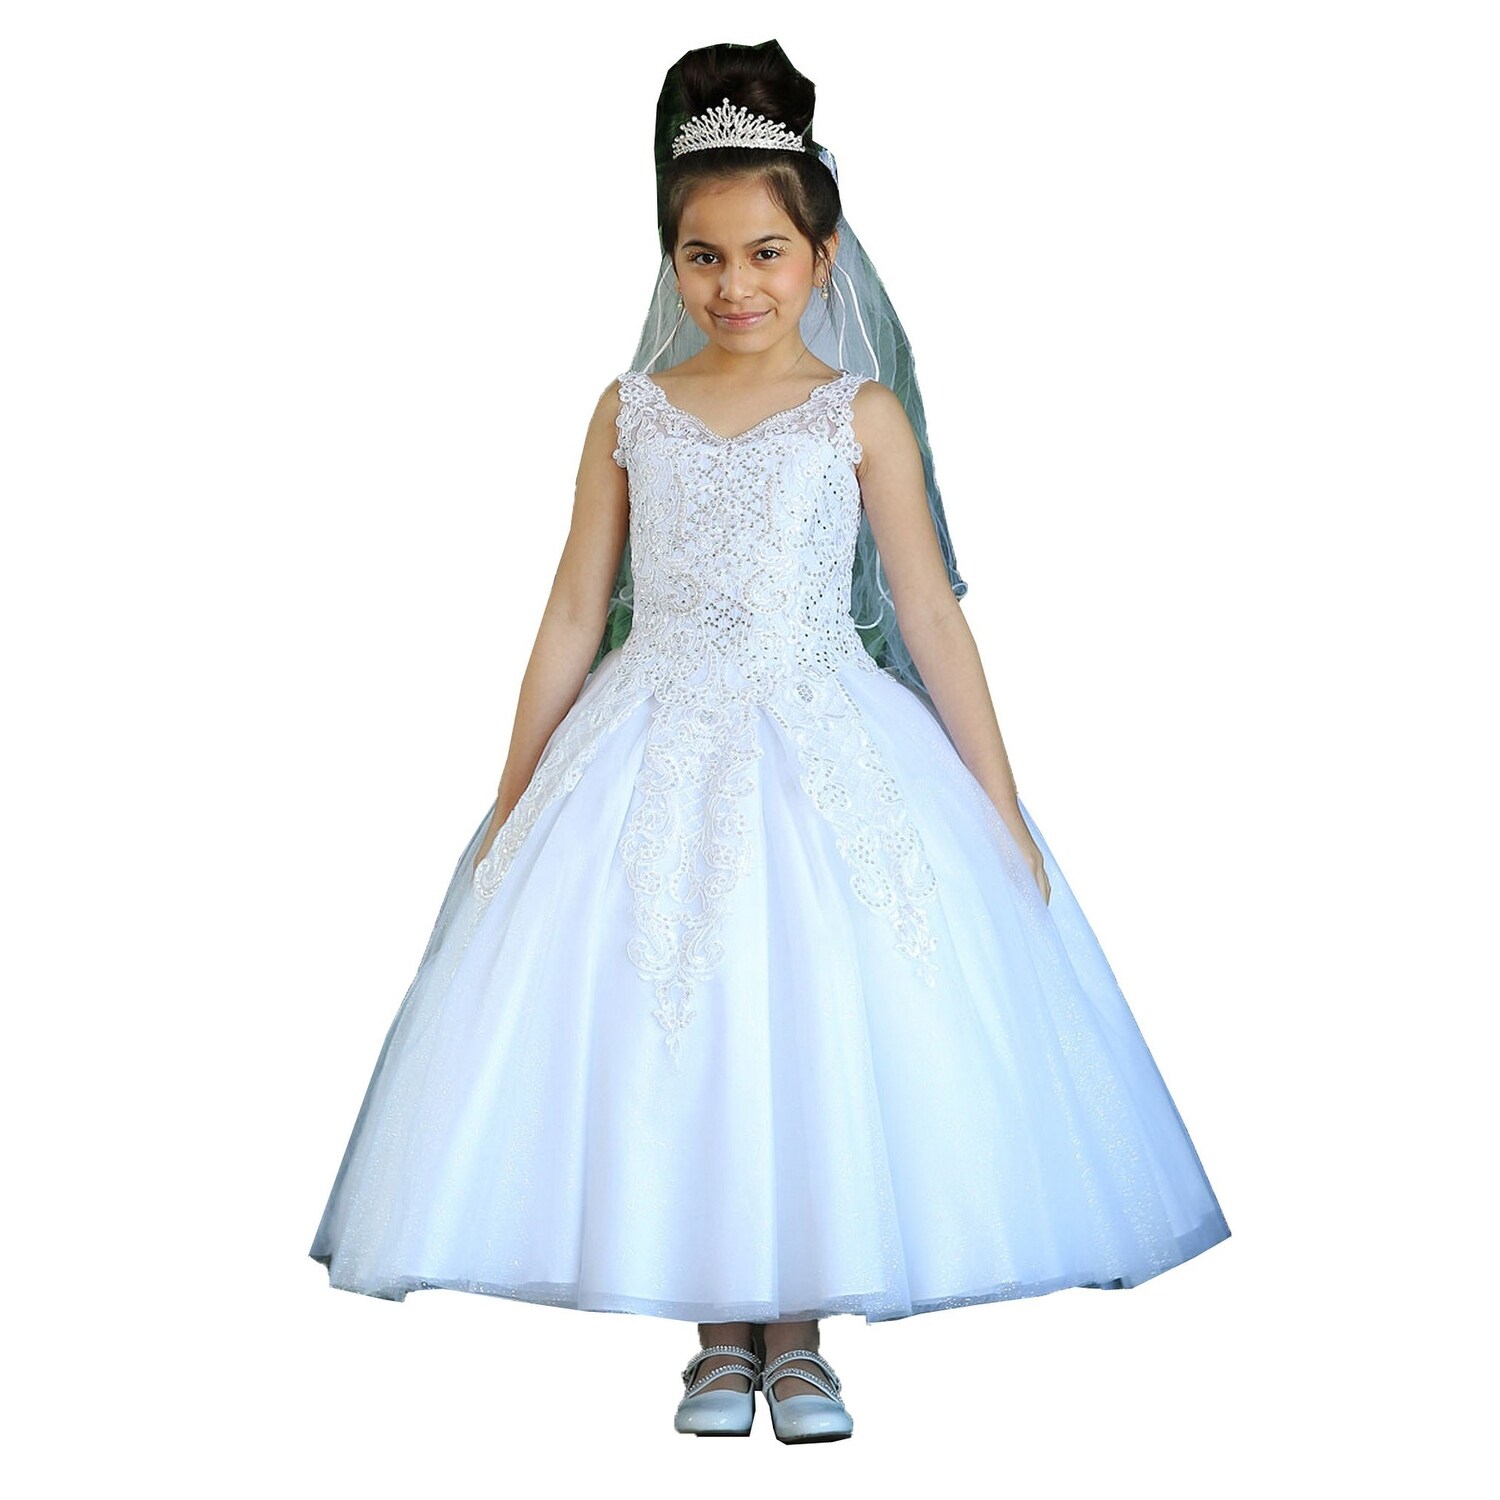 little girl ball gown dresses